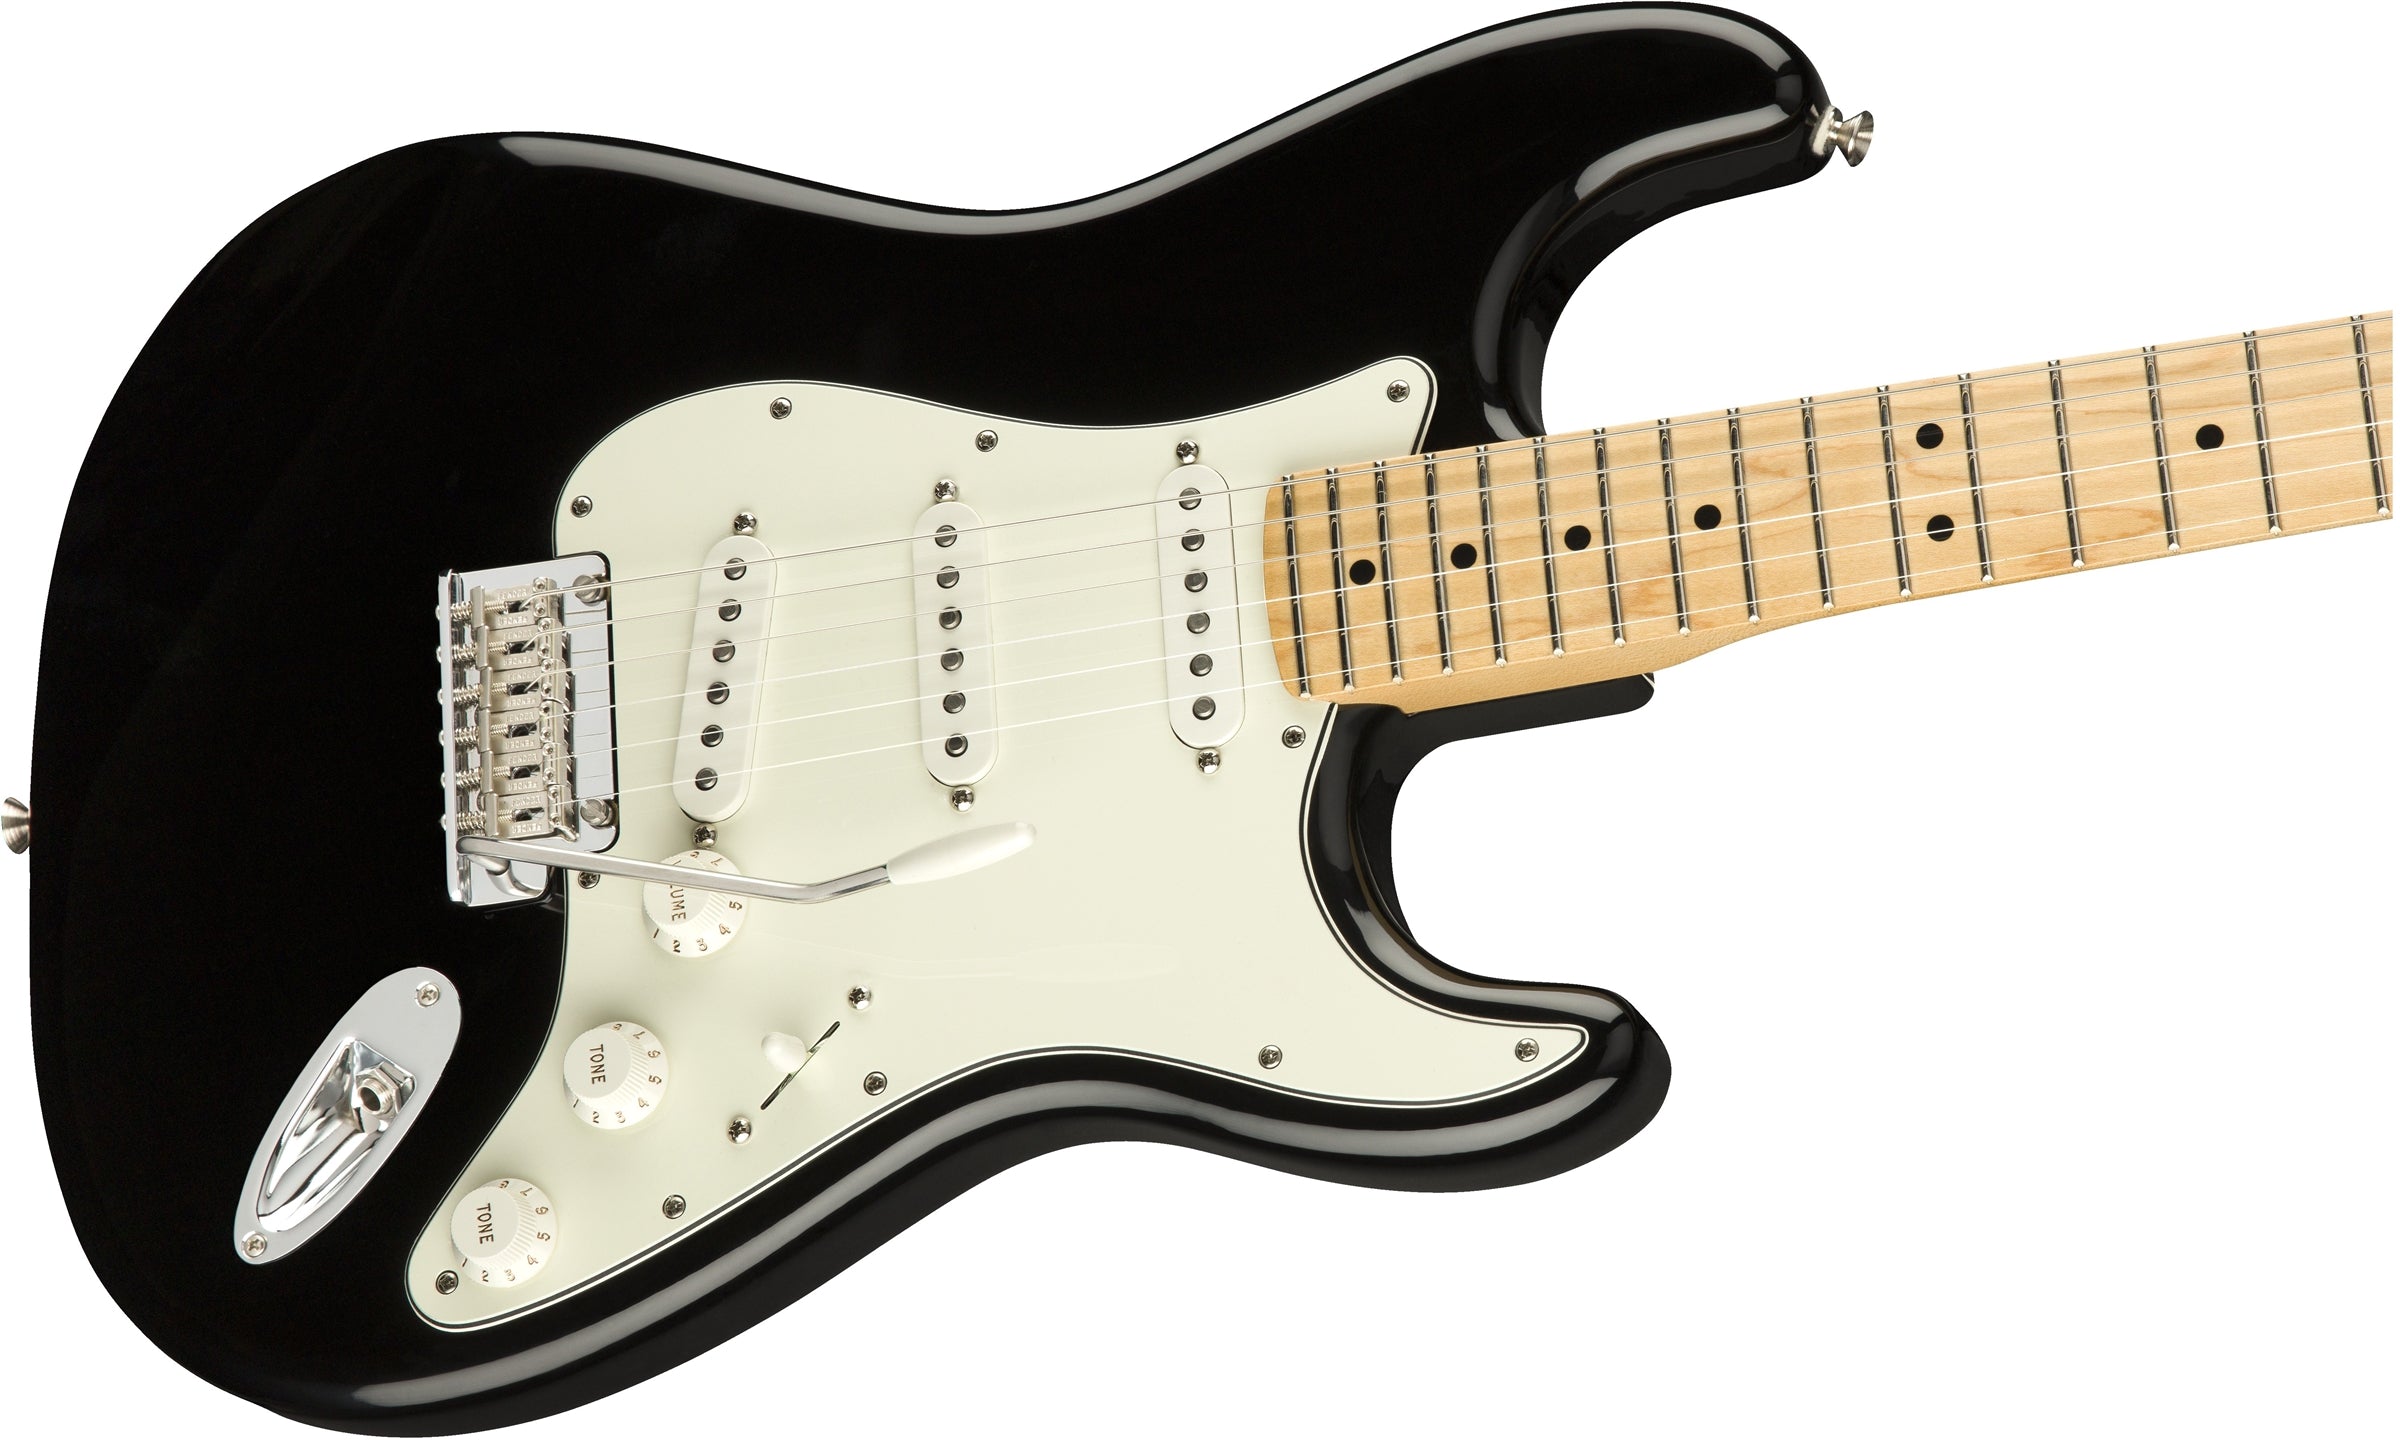 Fender Player stratocaster Electric Guitar - Black